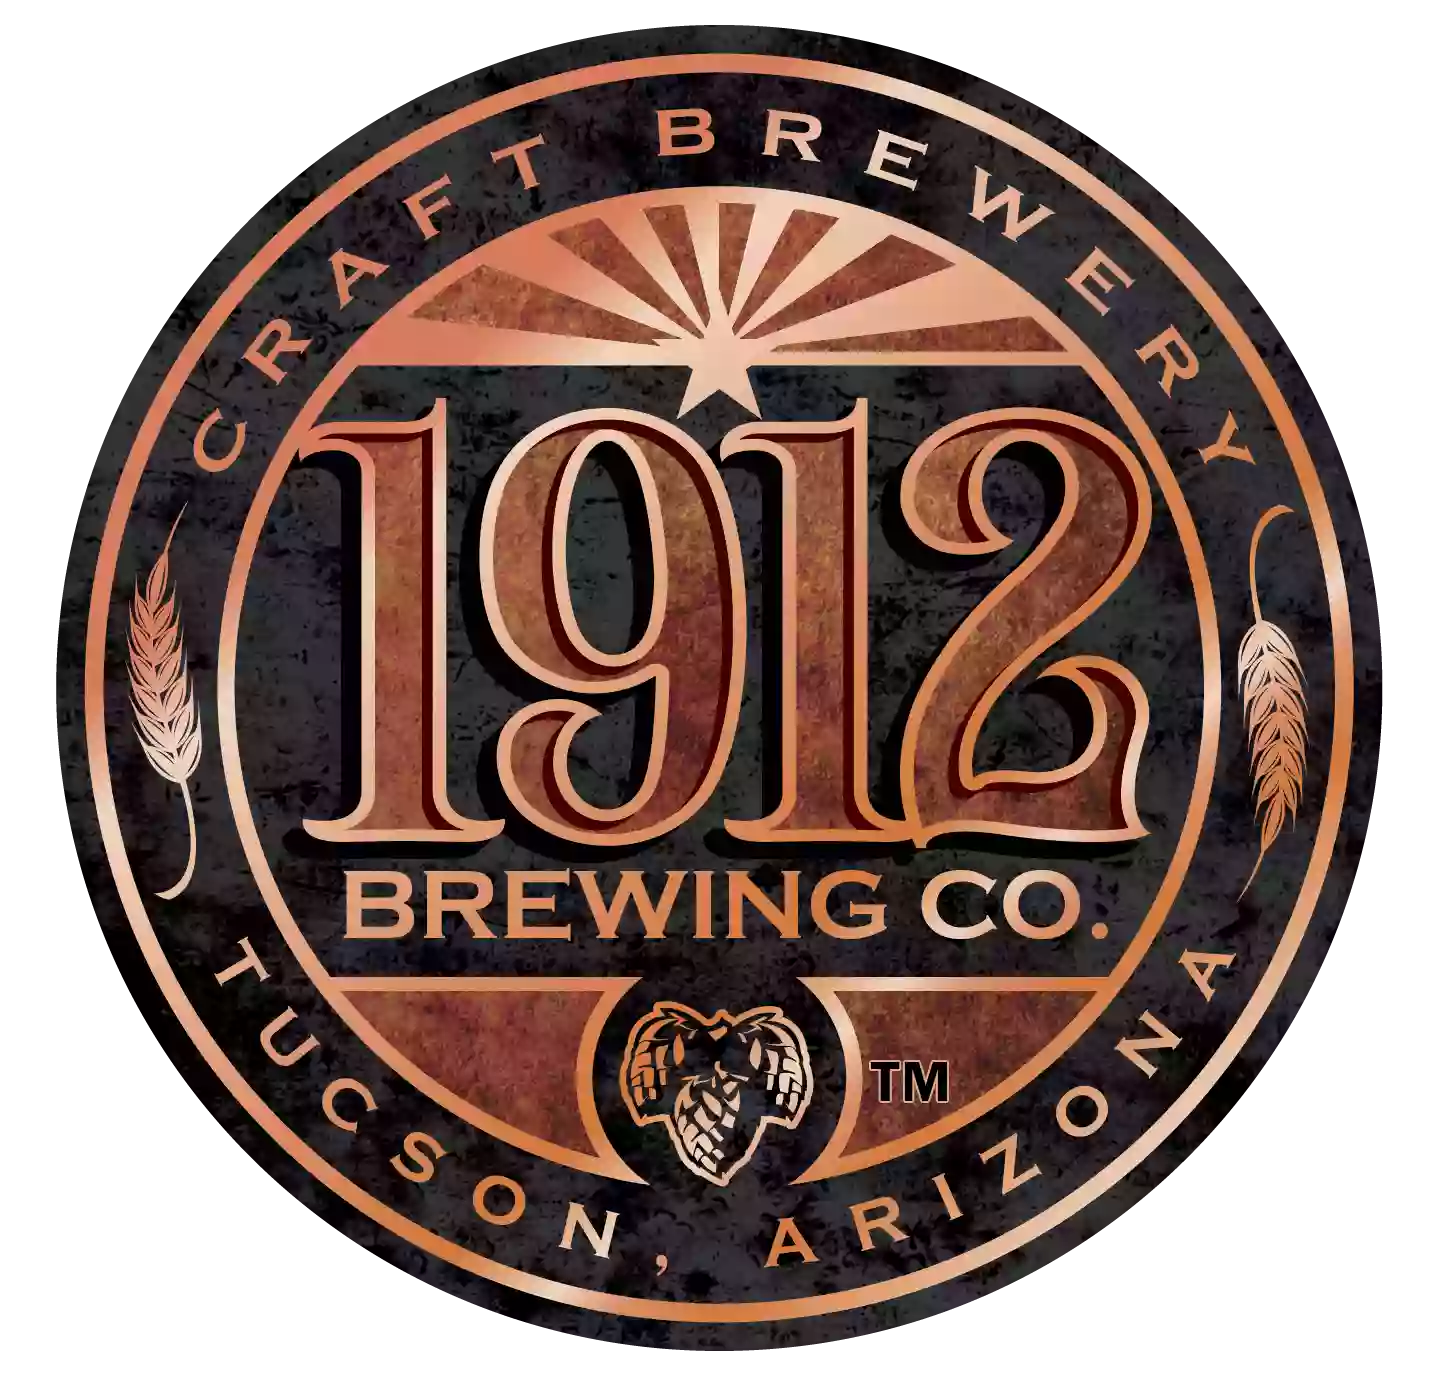 1912 Brewing Company